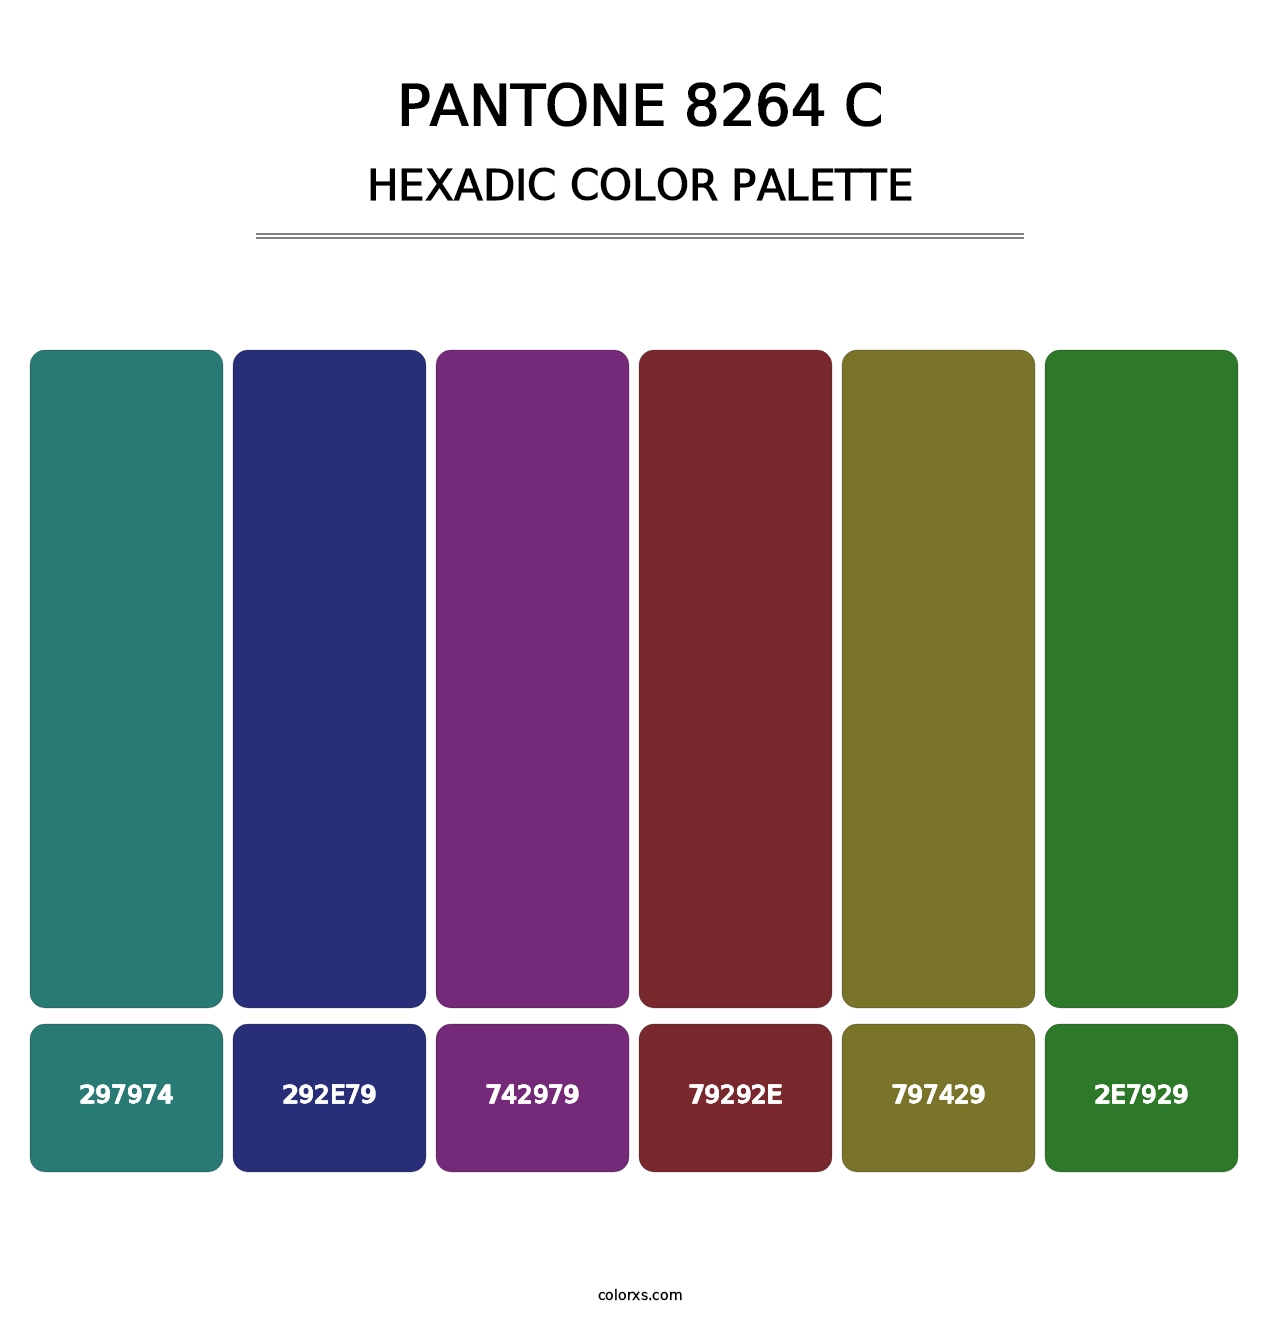 PANTONE 8264 C - Hexadic Color Palette